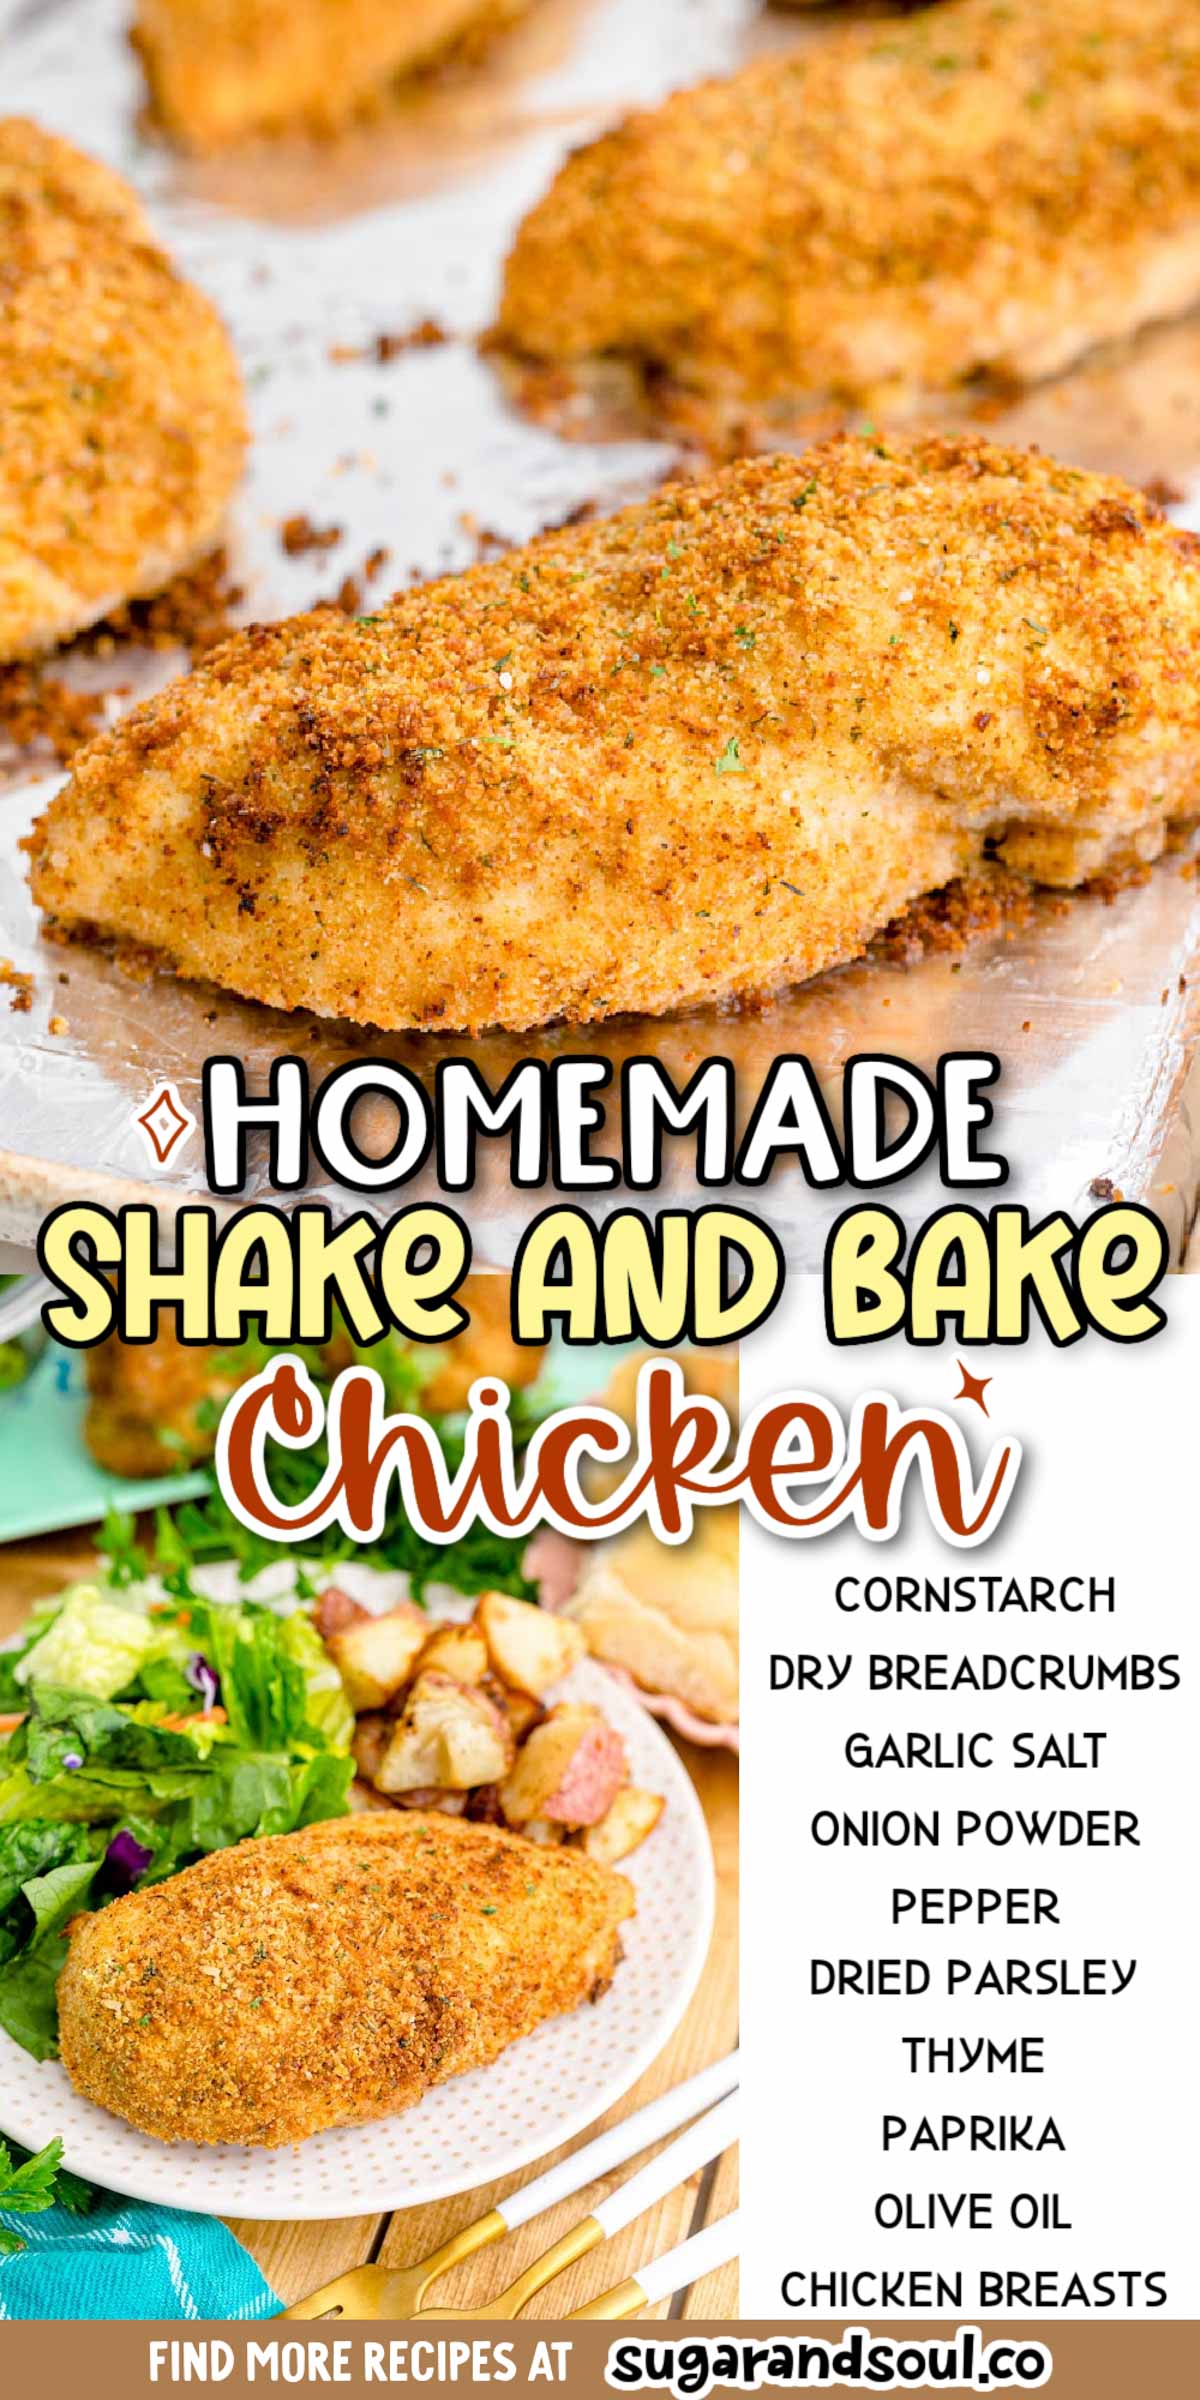 https://www.sugarandsoul.co/wp-content/uploads/2022/03/Homemade-Shake-and-Bake-Chicken.jpg